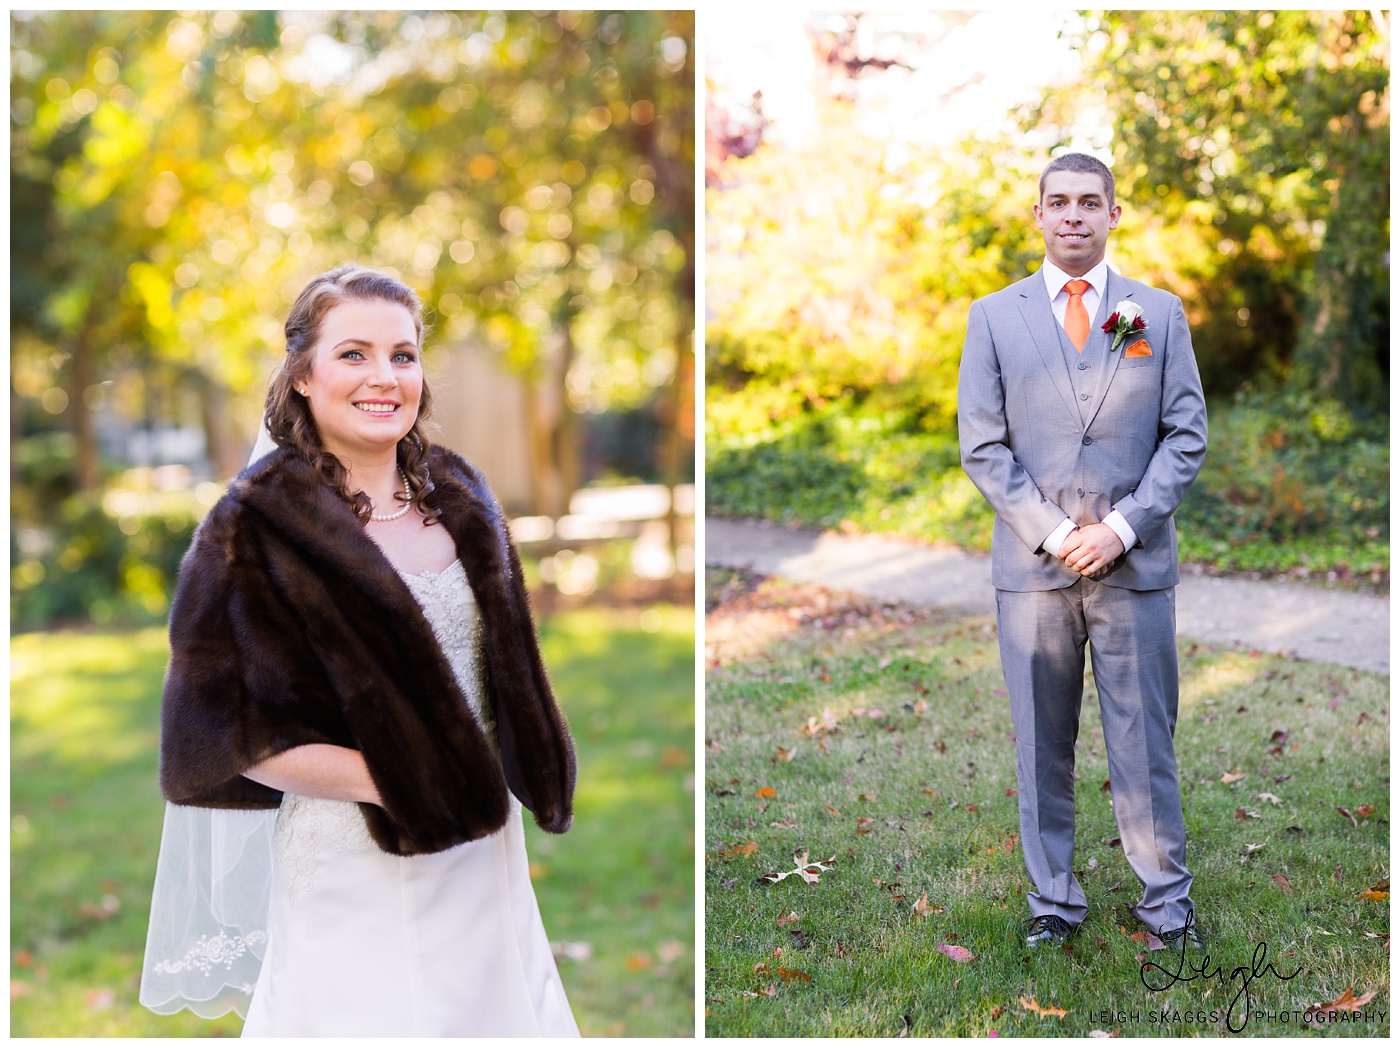 Nicole & Eric | Mariners Museum Fall Wedding